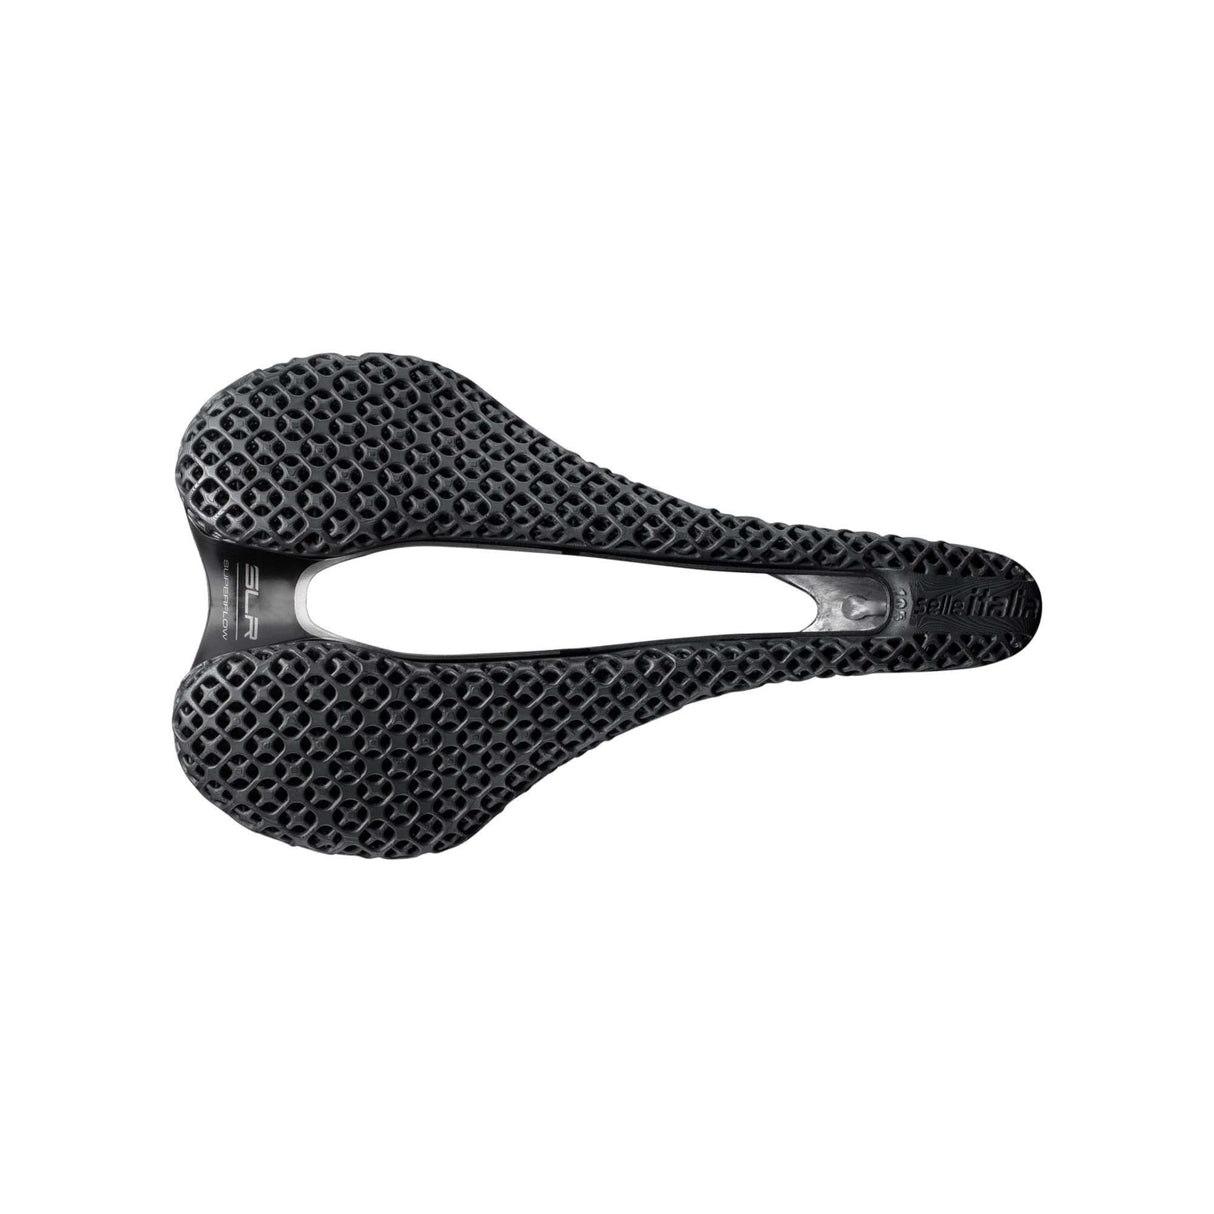 Selle Italia Slr Boost 3D Kit Carbonio Superflow Saddle: Black/Black L3